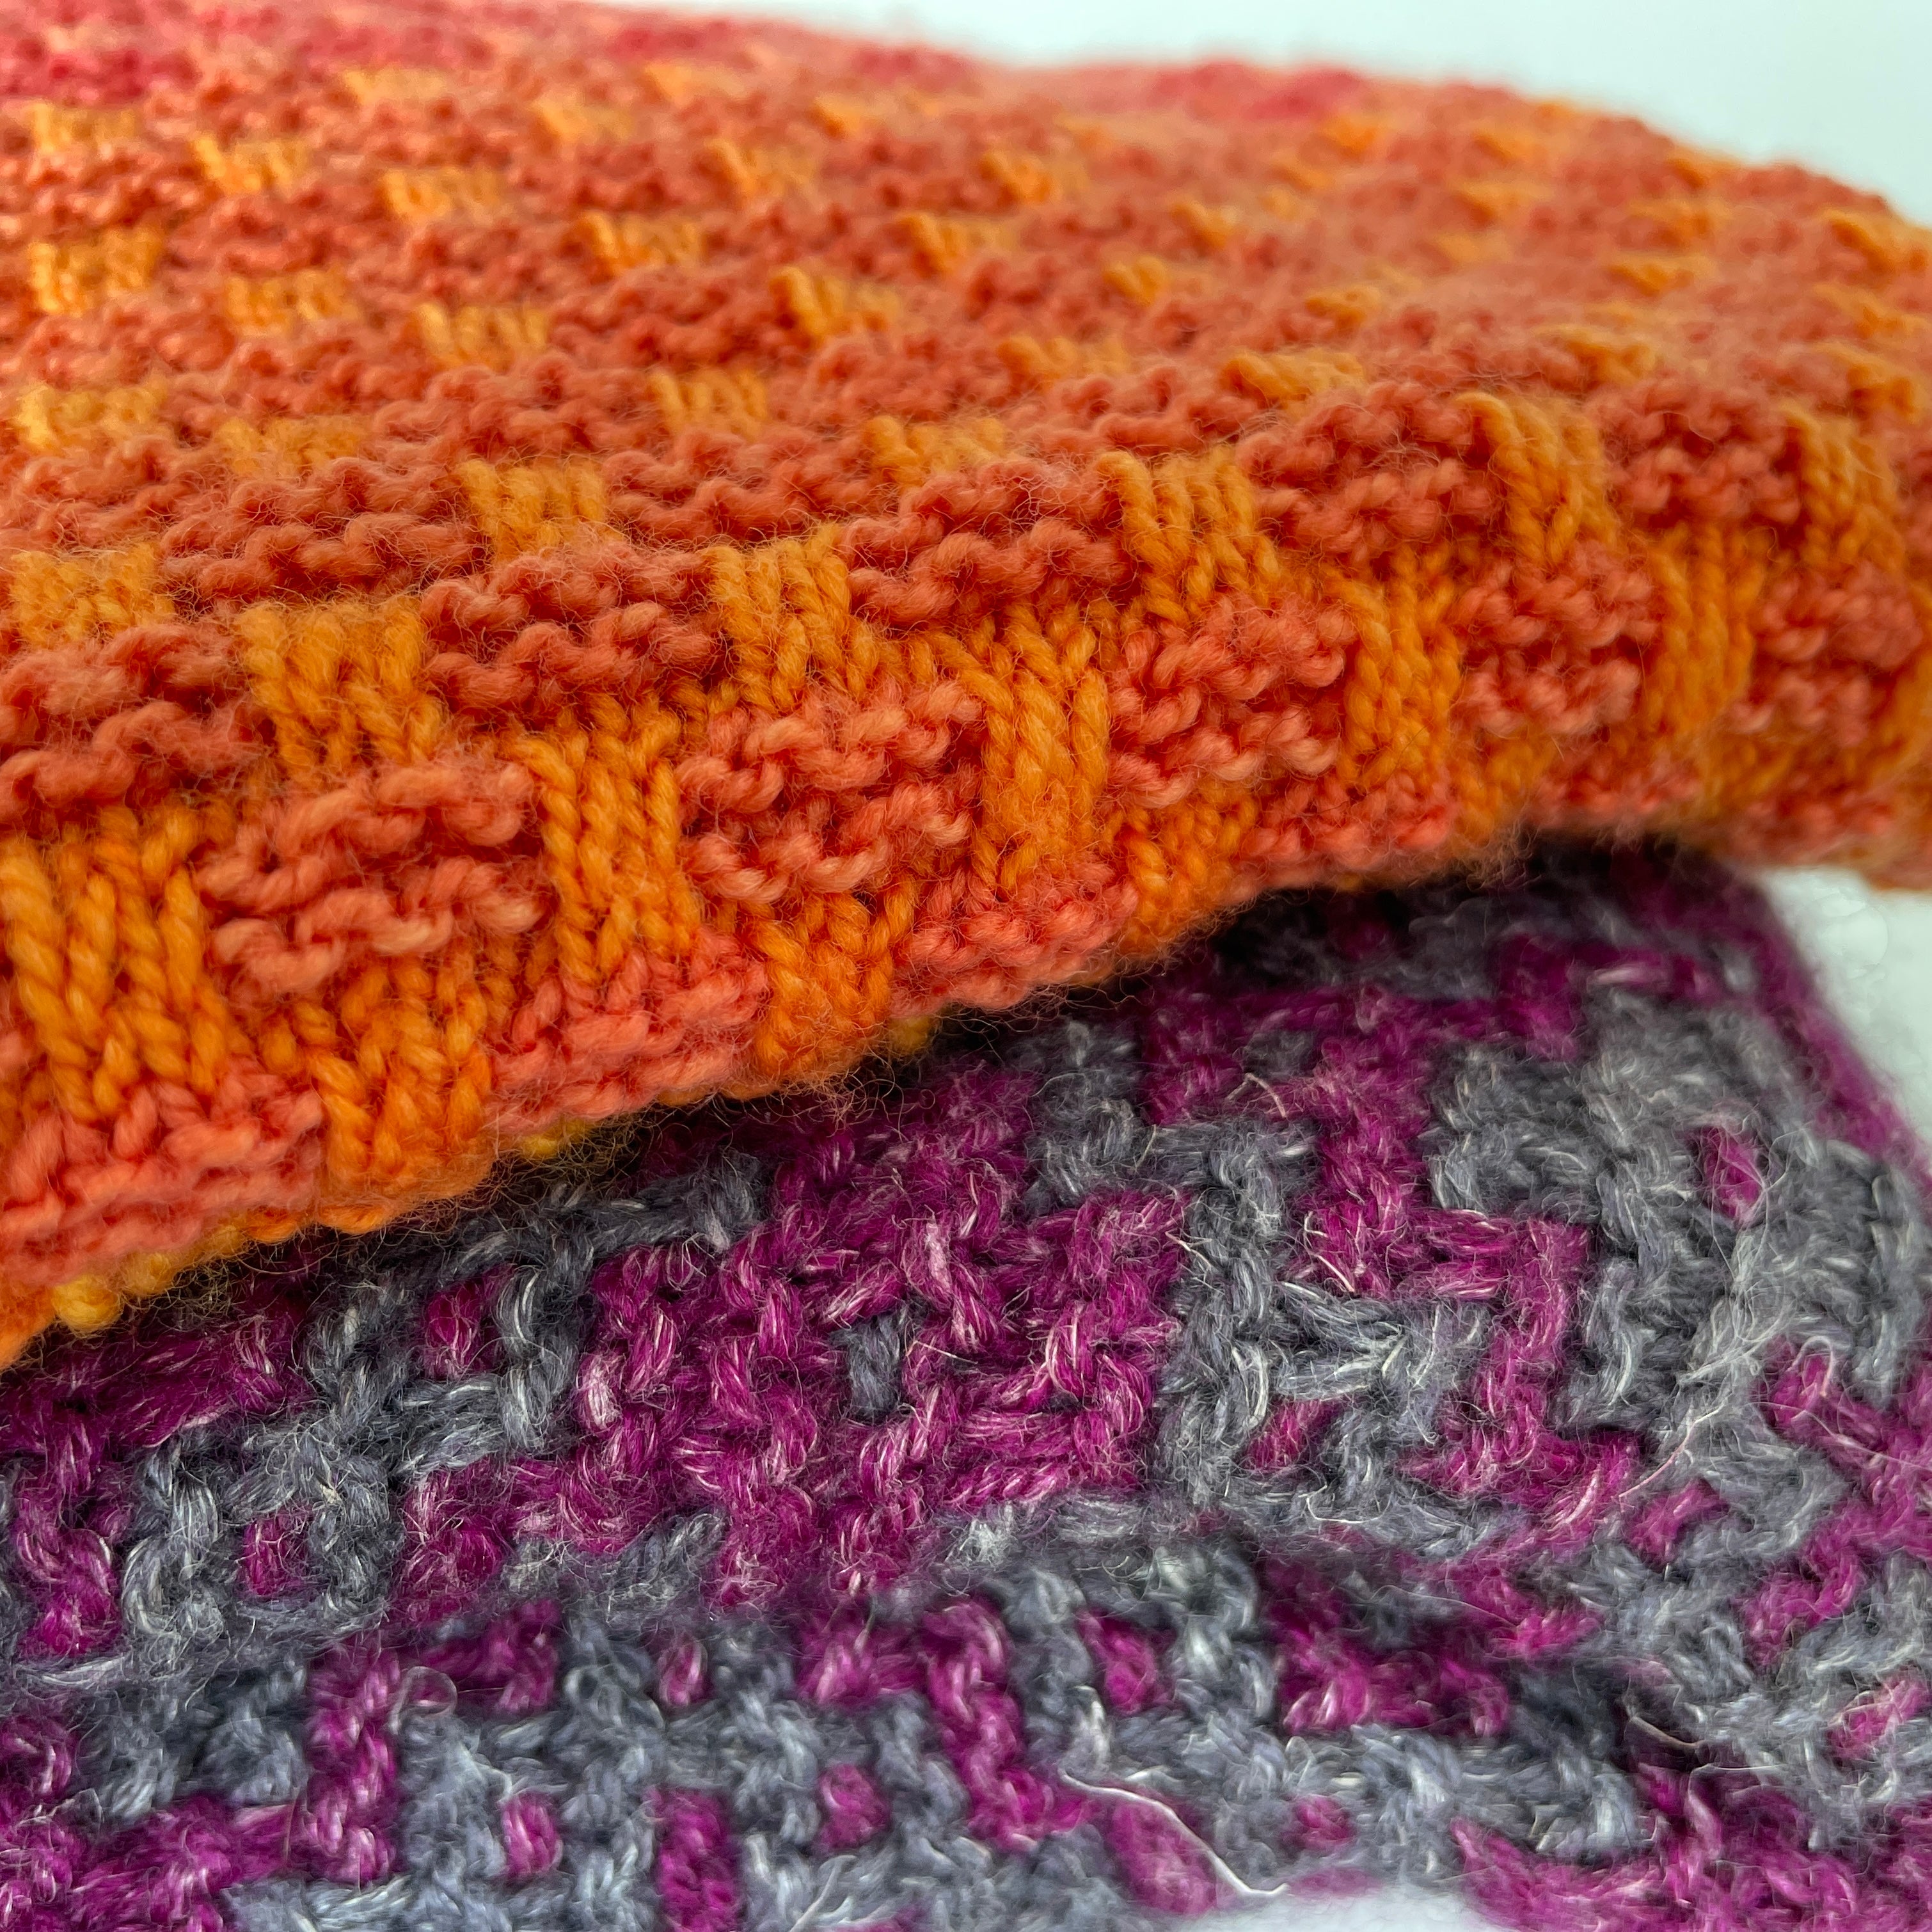 Learn to Knit: How to Knit Slip Stitch Colourwork - Stolen Stitches